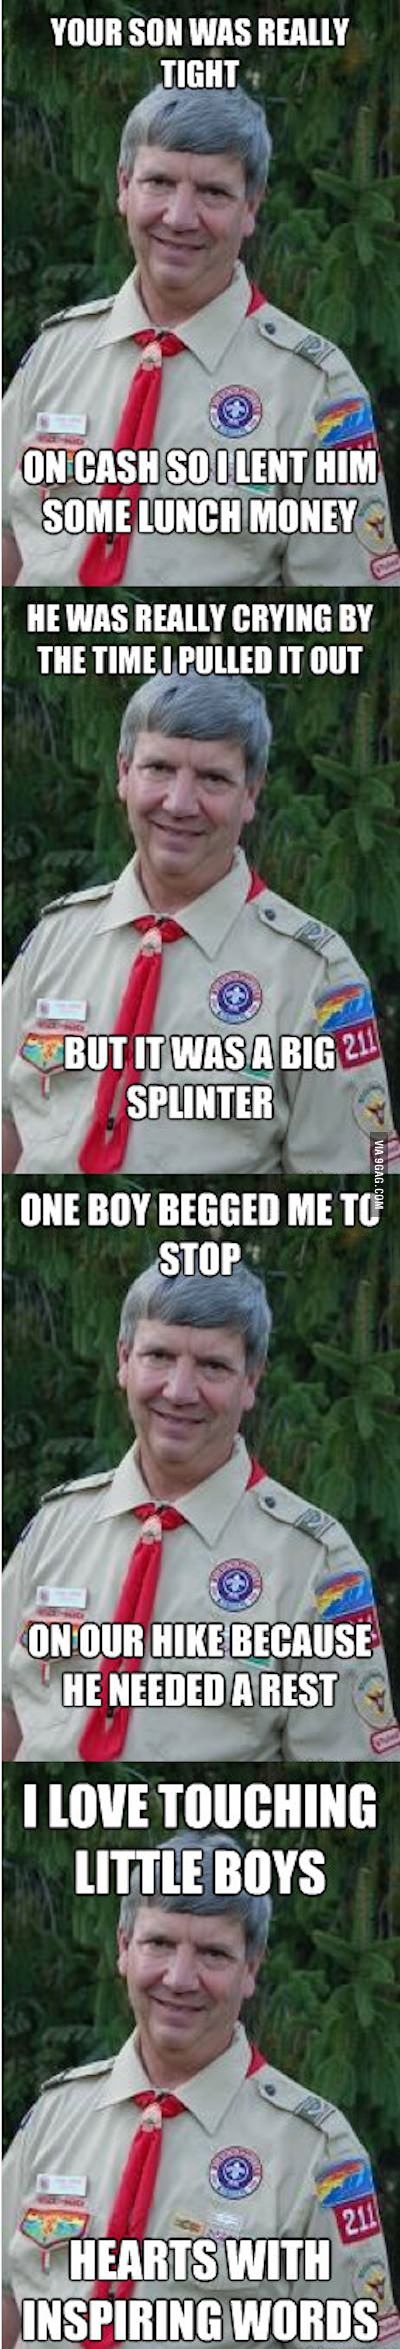 harmless boy scout leader meme